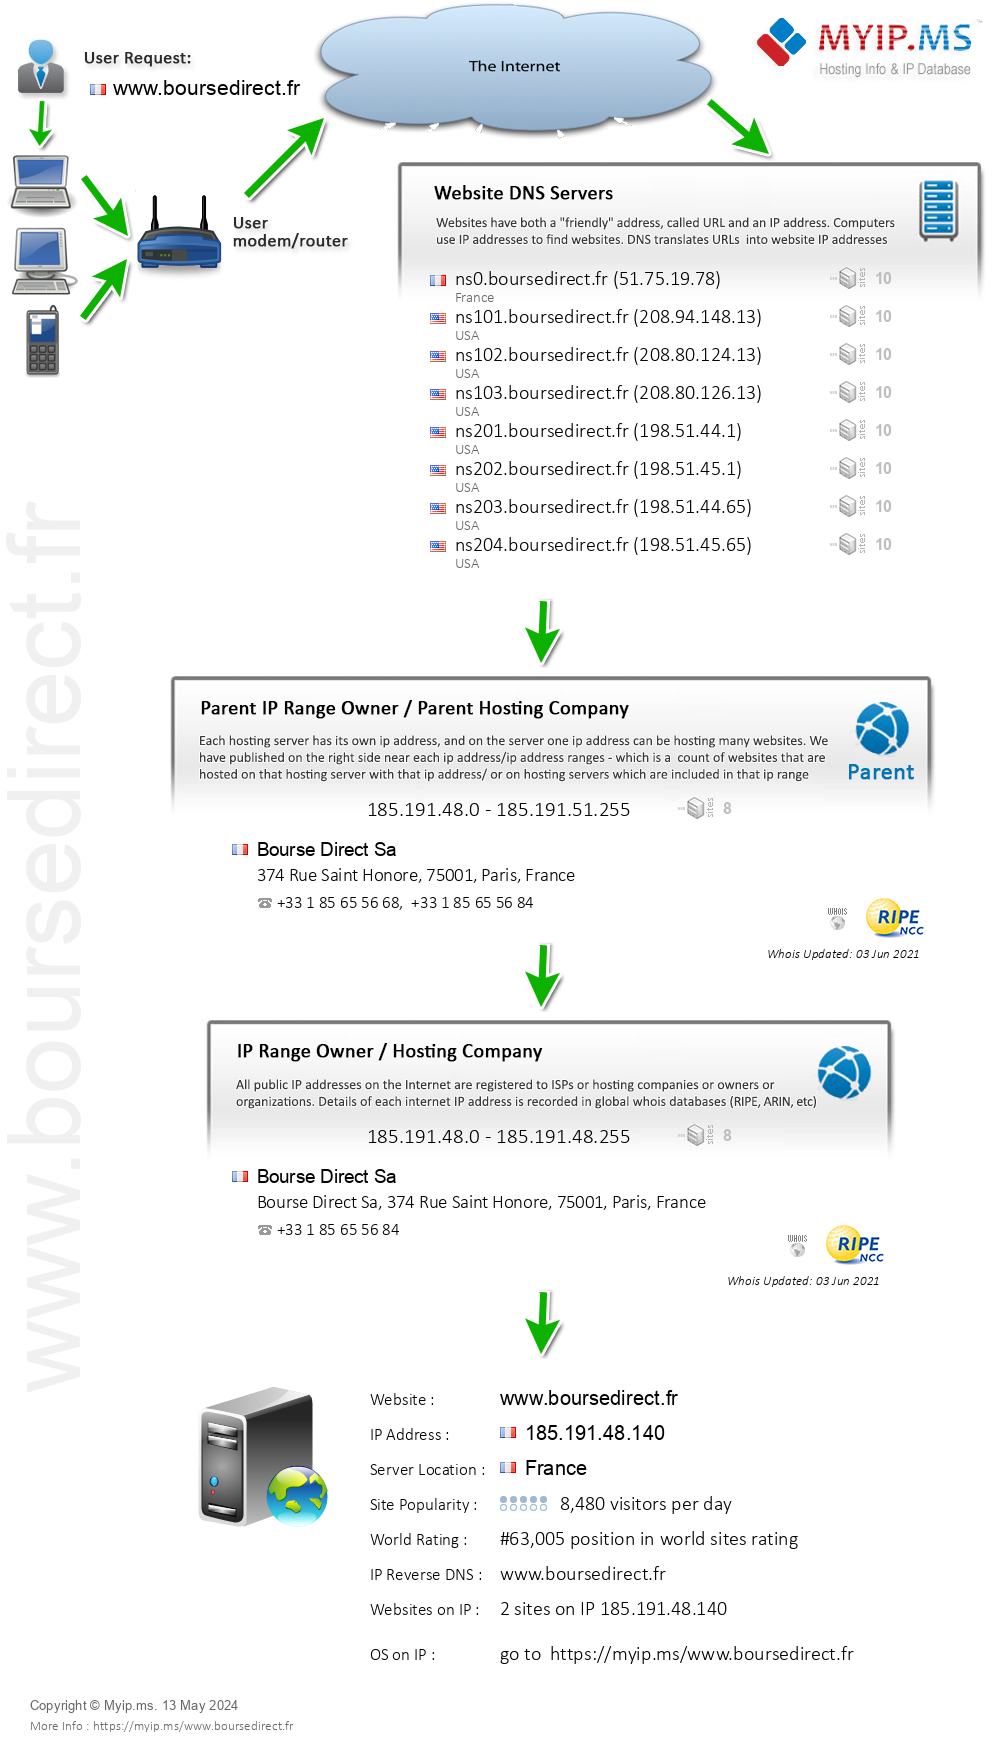 Boursedirect.fr - Website Hosting Visual IP Diagram